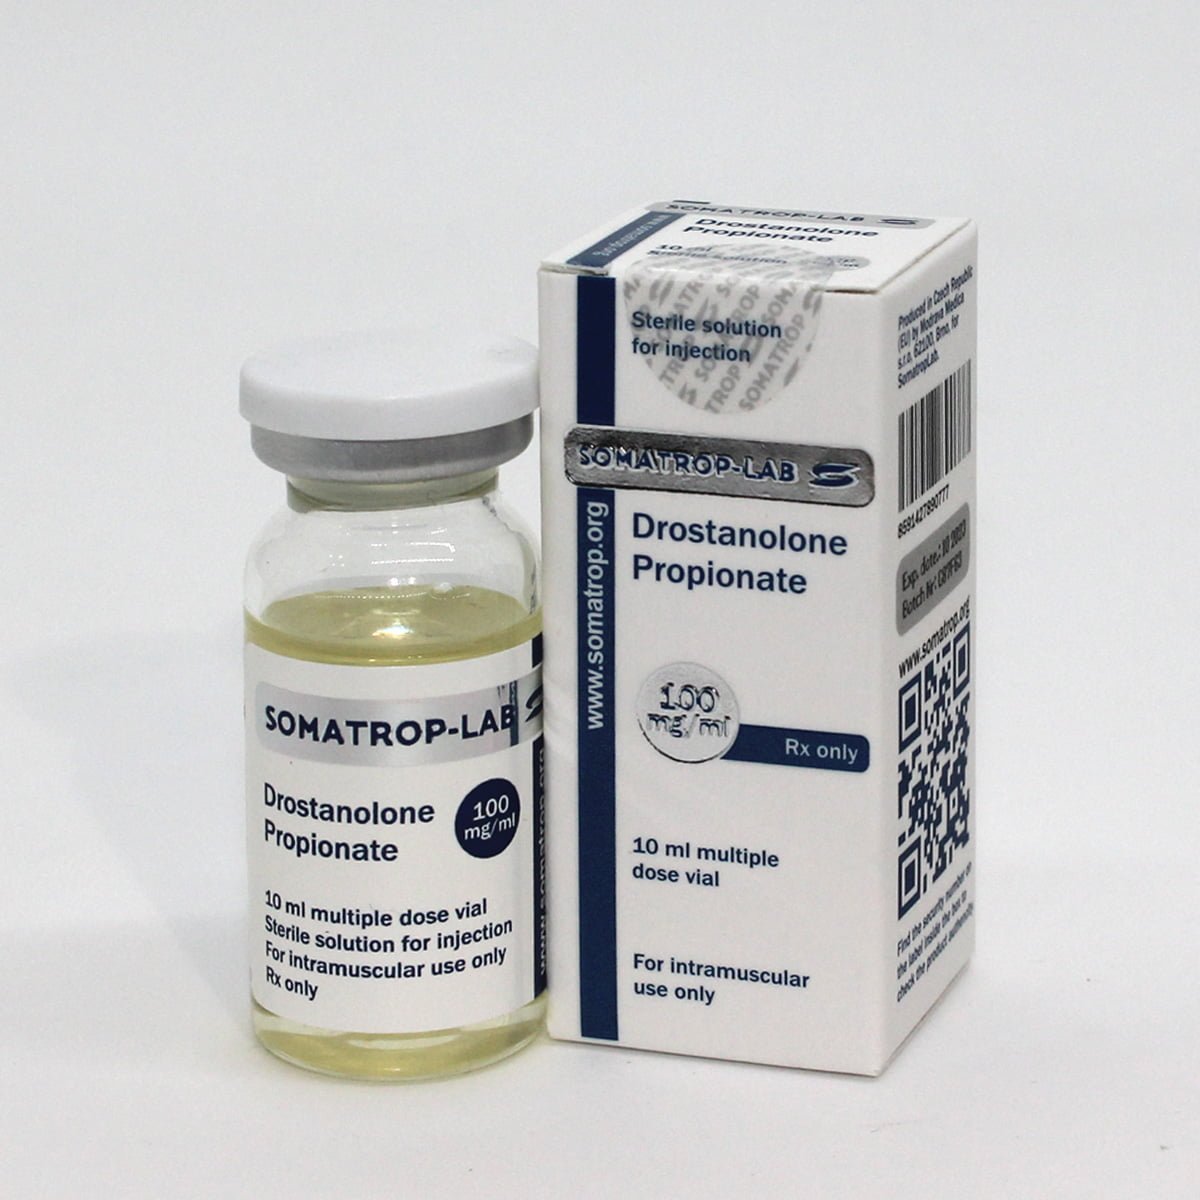 Somatrop-Lab Drostanolone Propionate